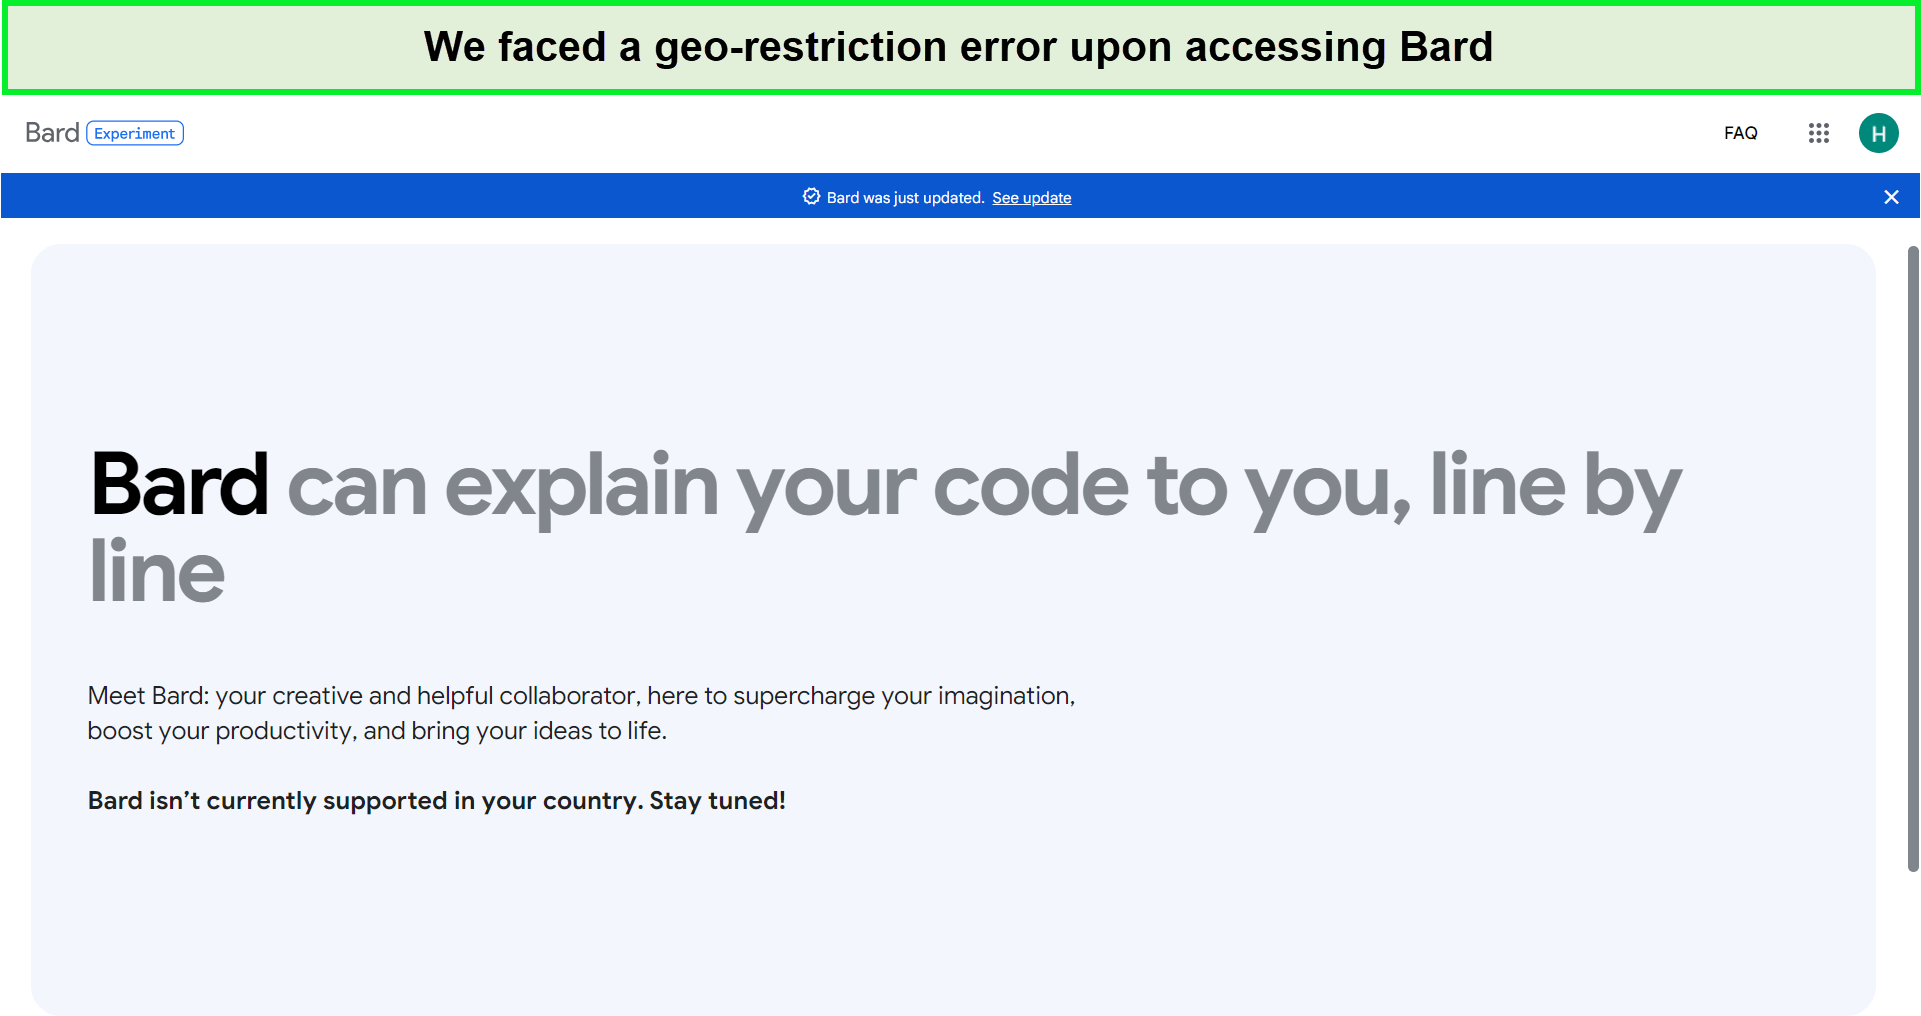 bard-in-UK-geo-restriction-error